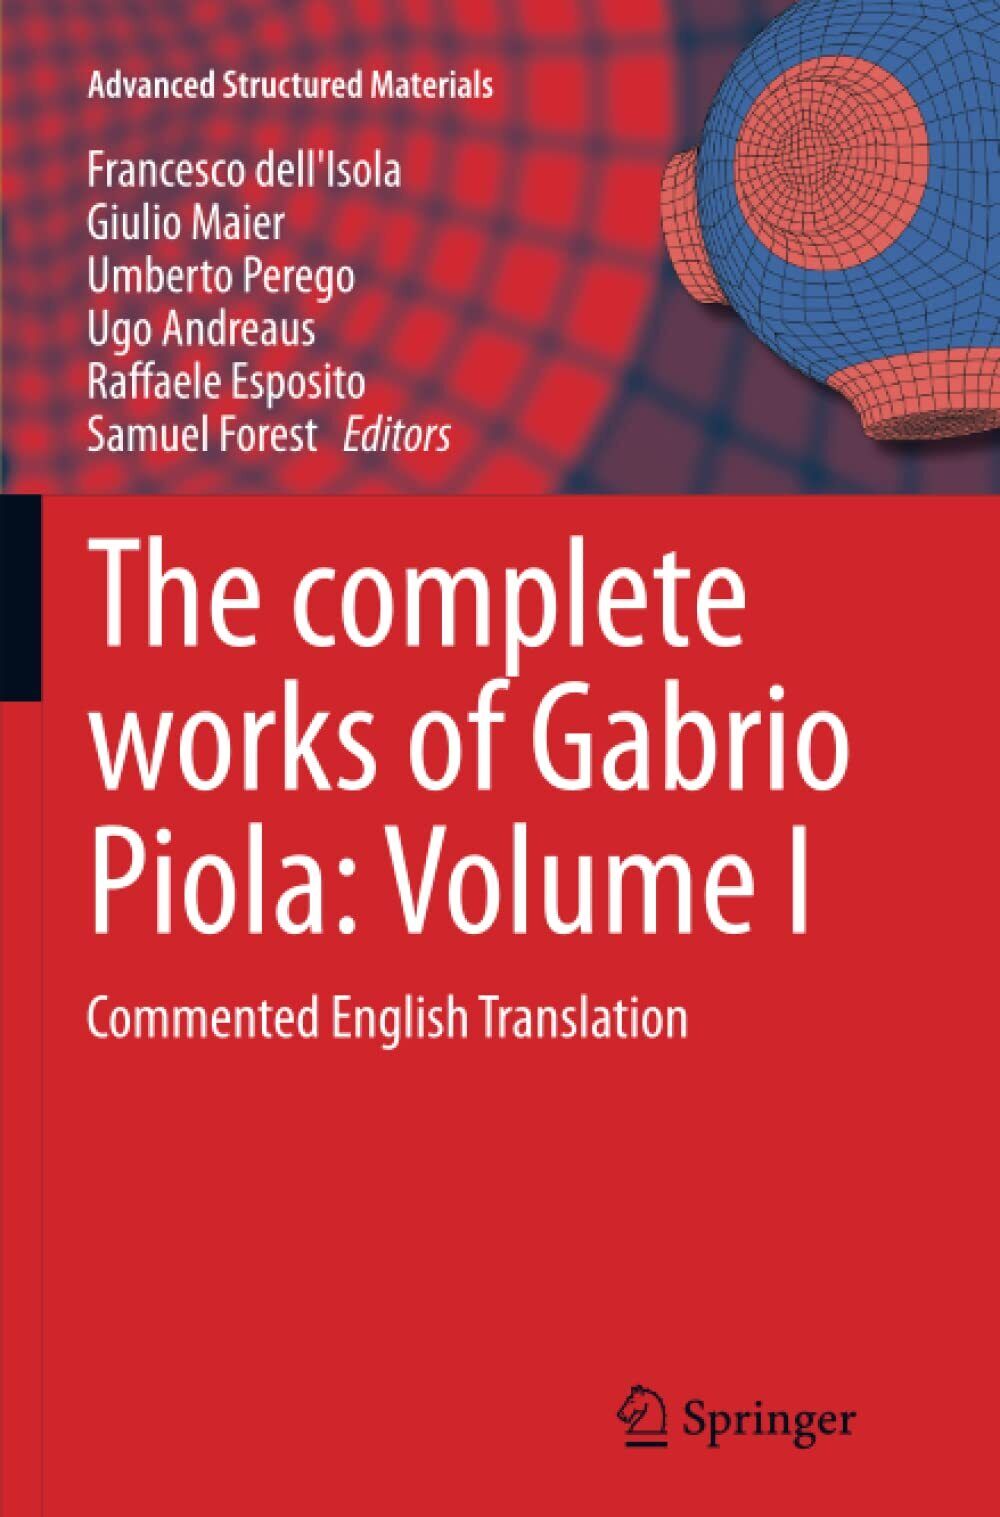 The complete works of Gabrio Piola: Volume I - Francesco dell'Isola - 2016